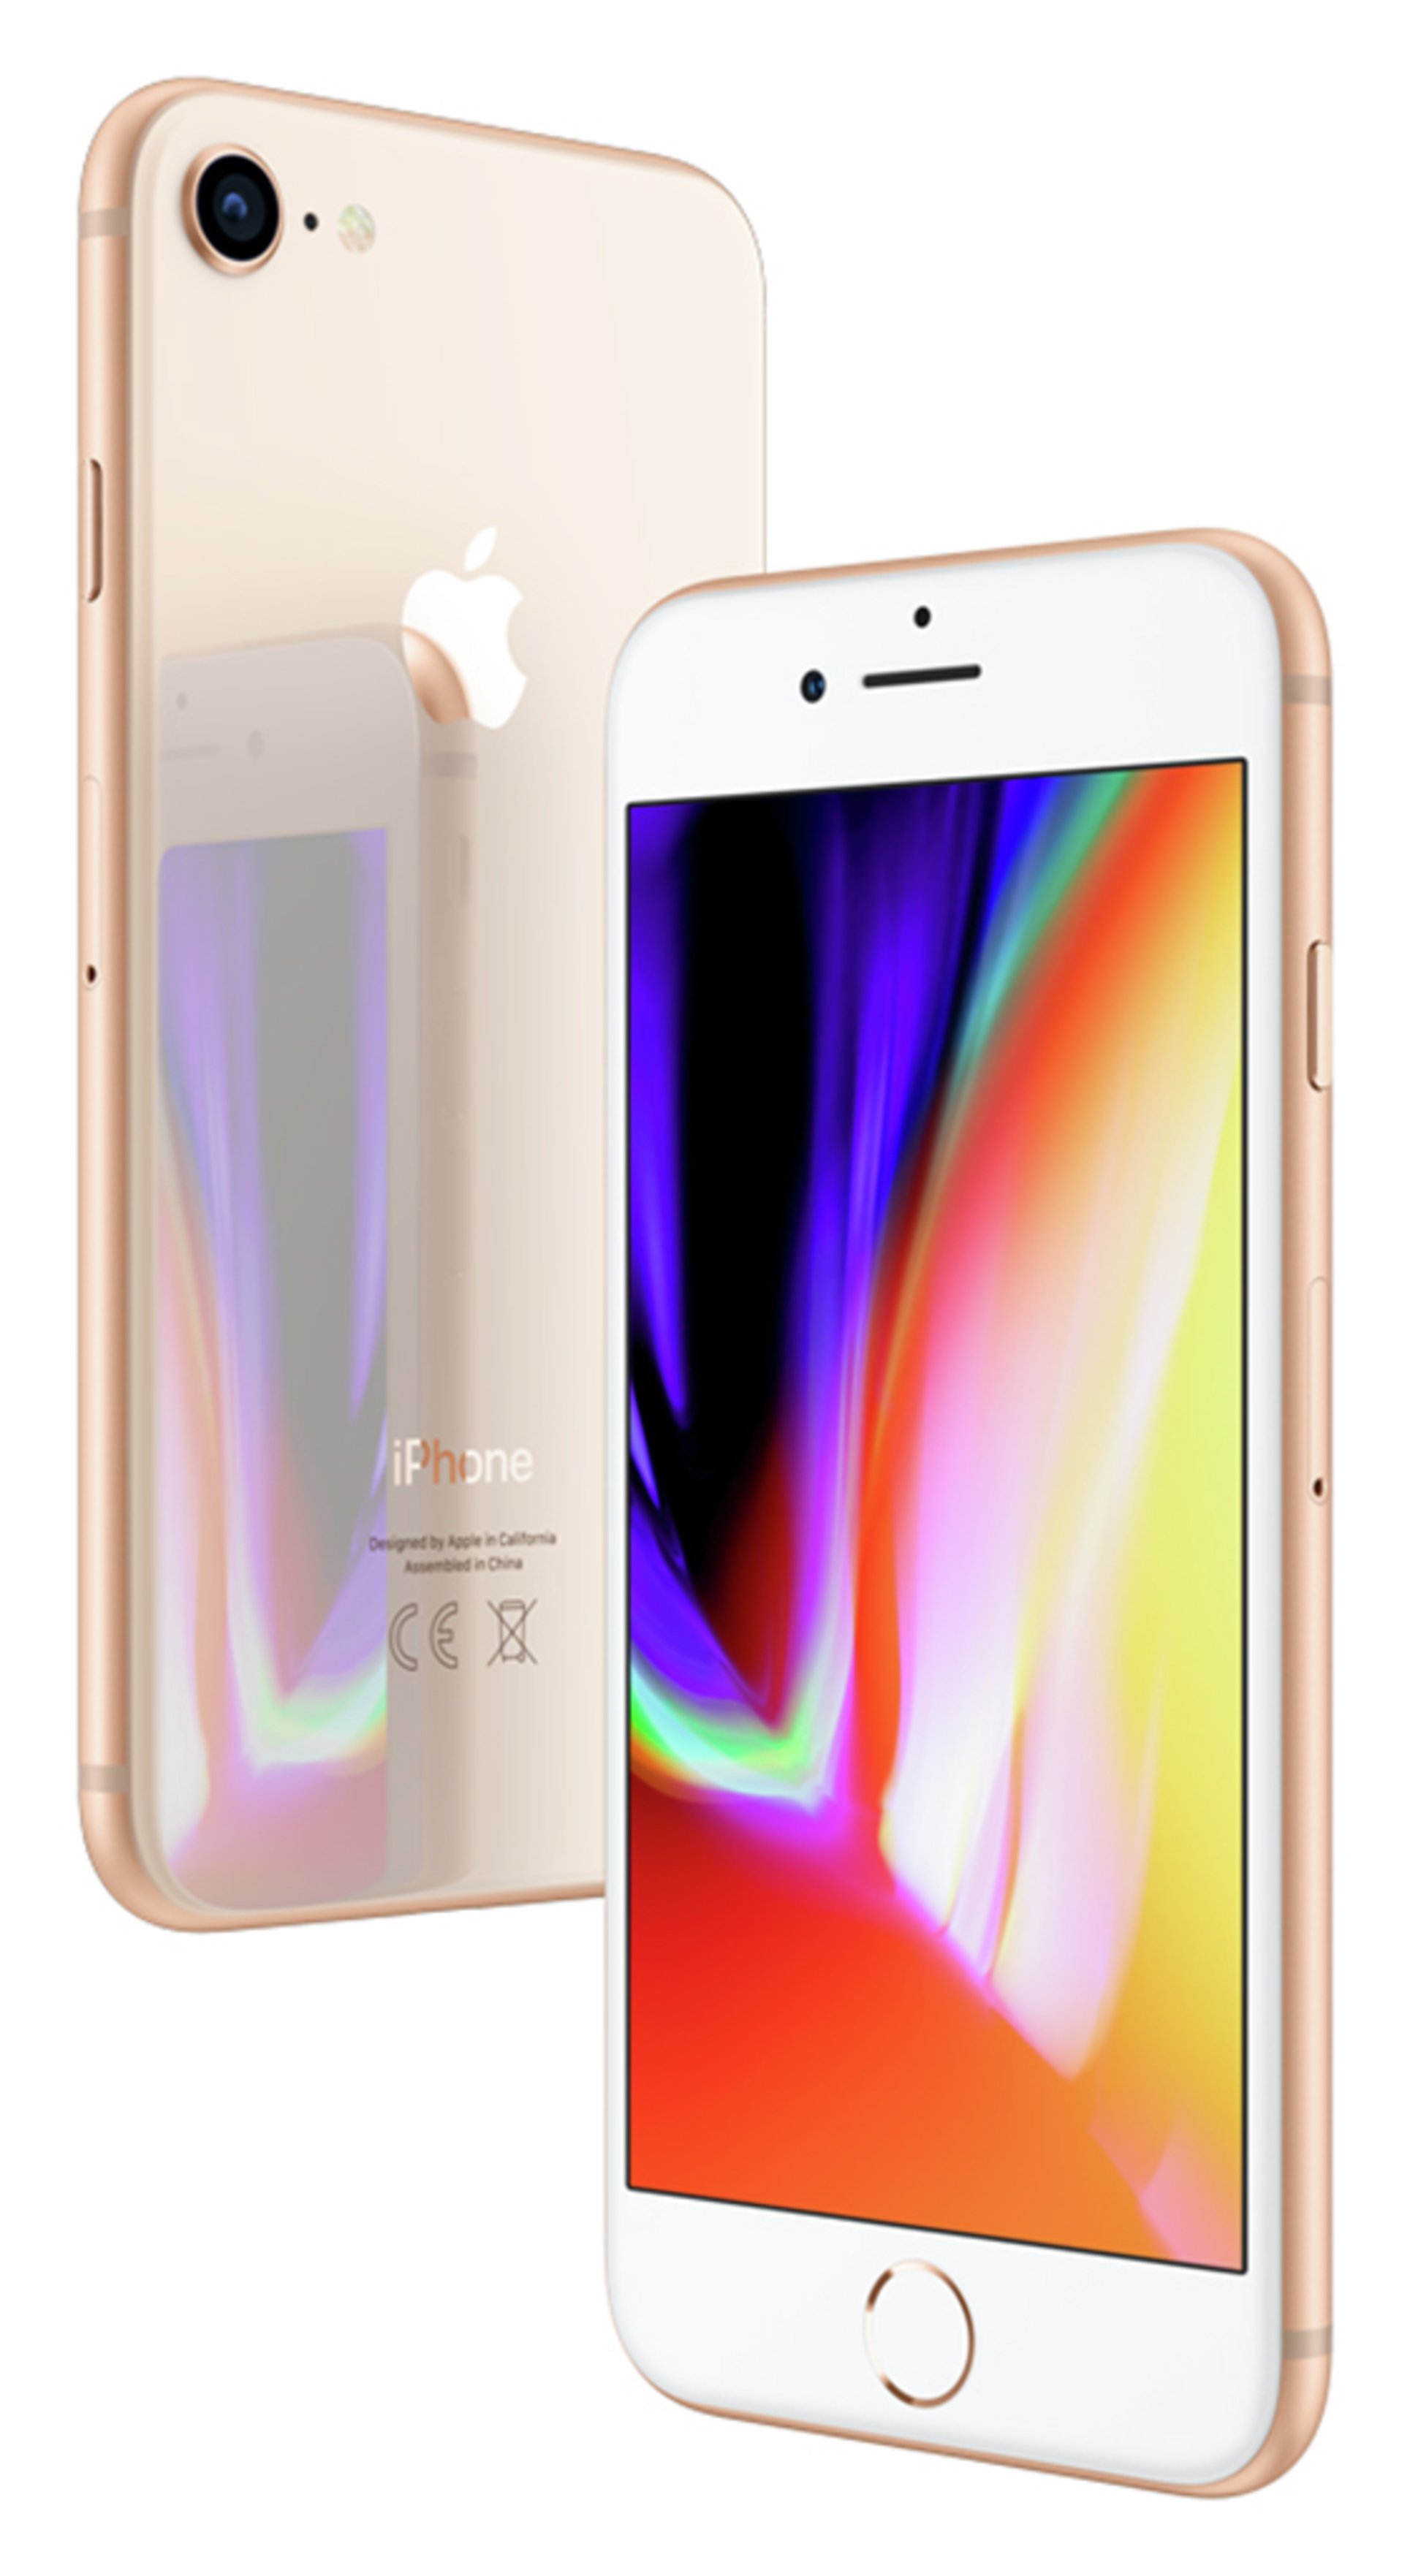 SIM Free iPhone 8 64GB Mobile Phone - Gold